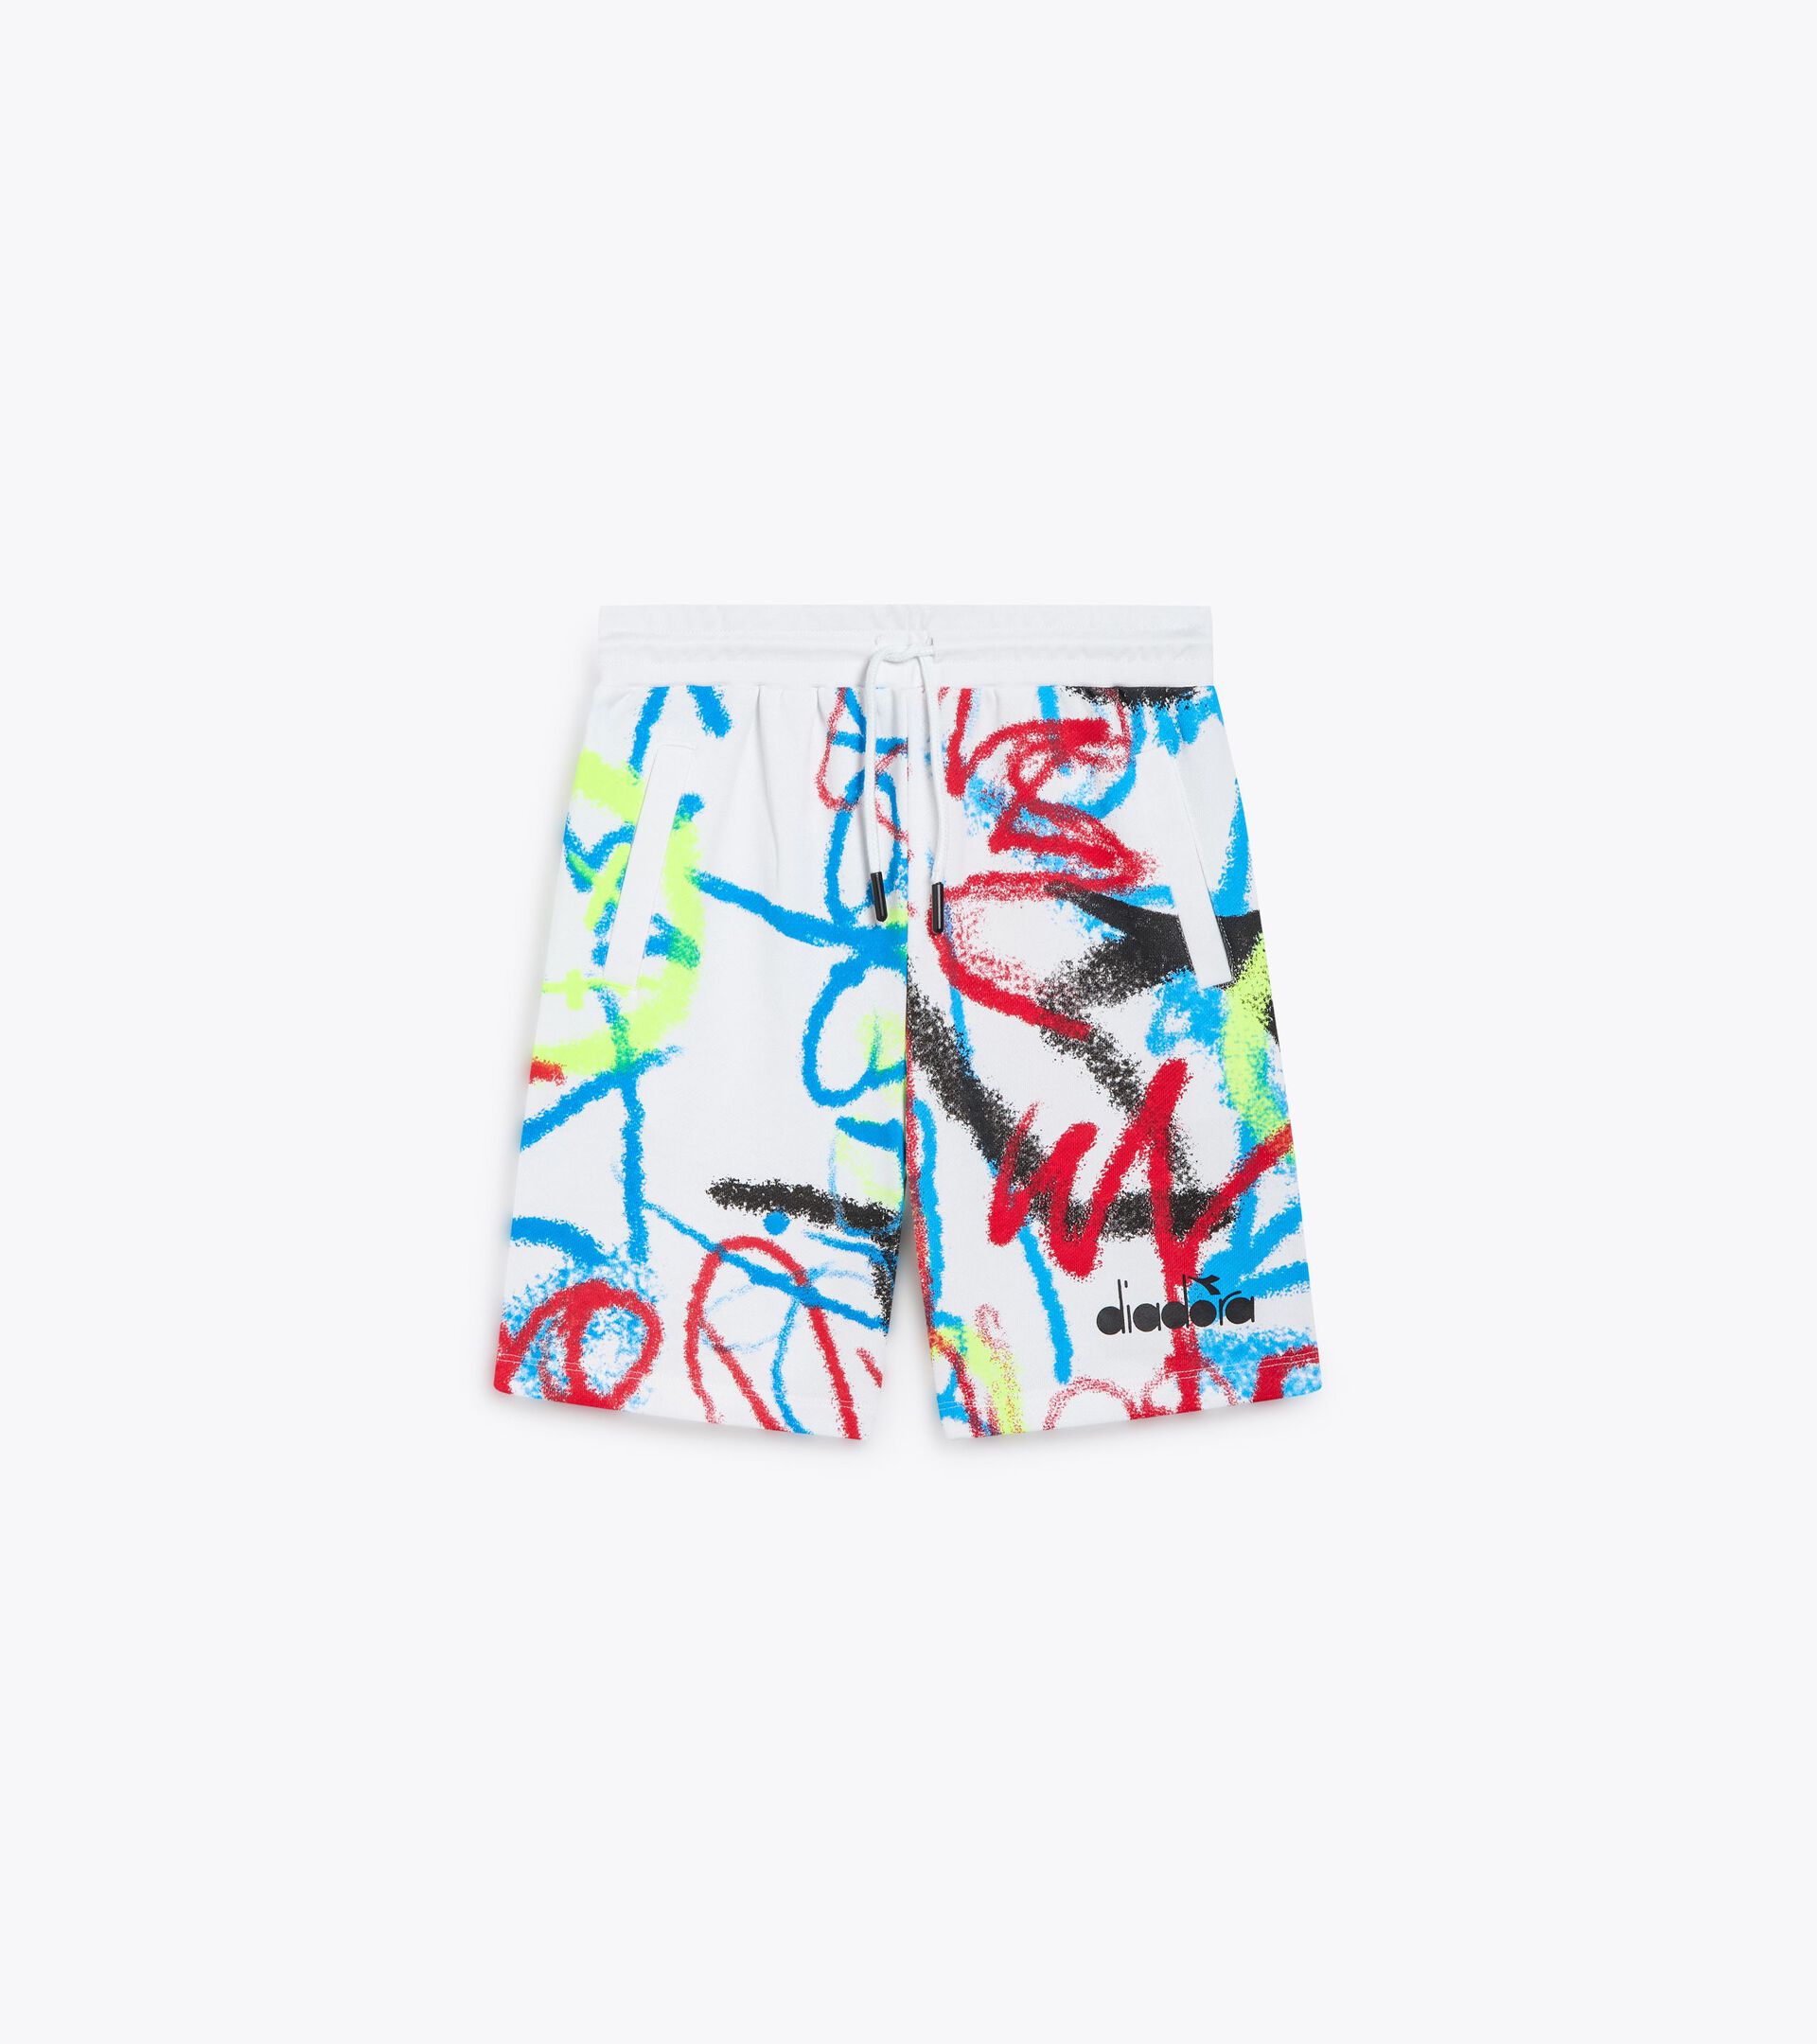 Bermuda shorts - Graffiti-inspired print - Boy
 JB. BERMUDA GRAFFITI ANTIQUE WHITE - Diadora